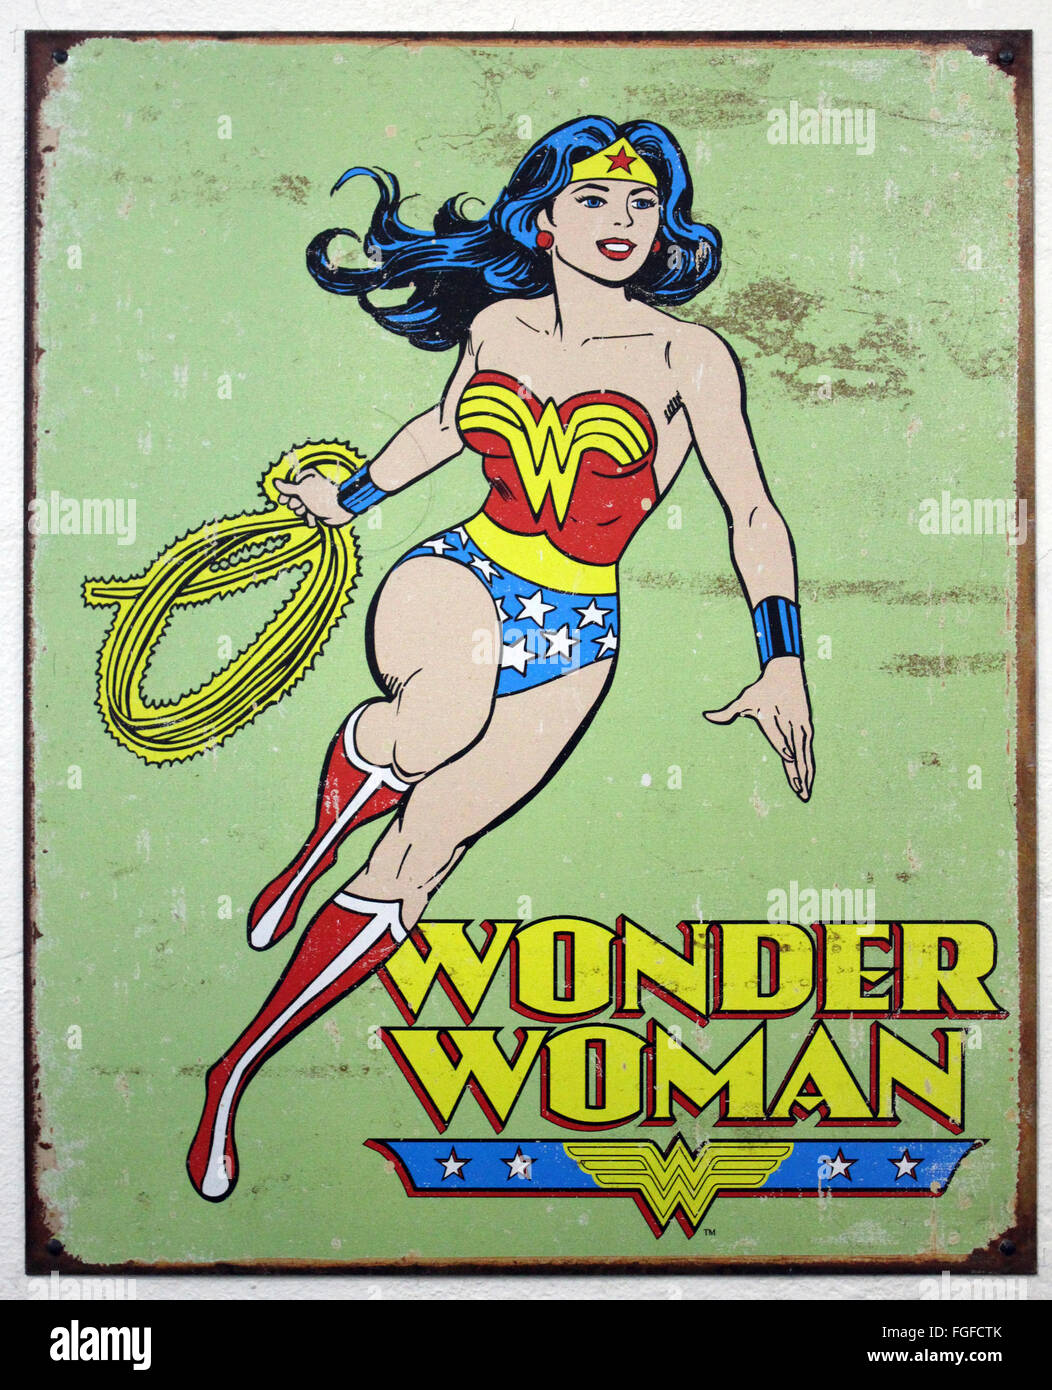 Wonder Woman Wall Plaque Stock Photo